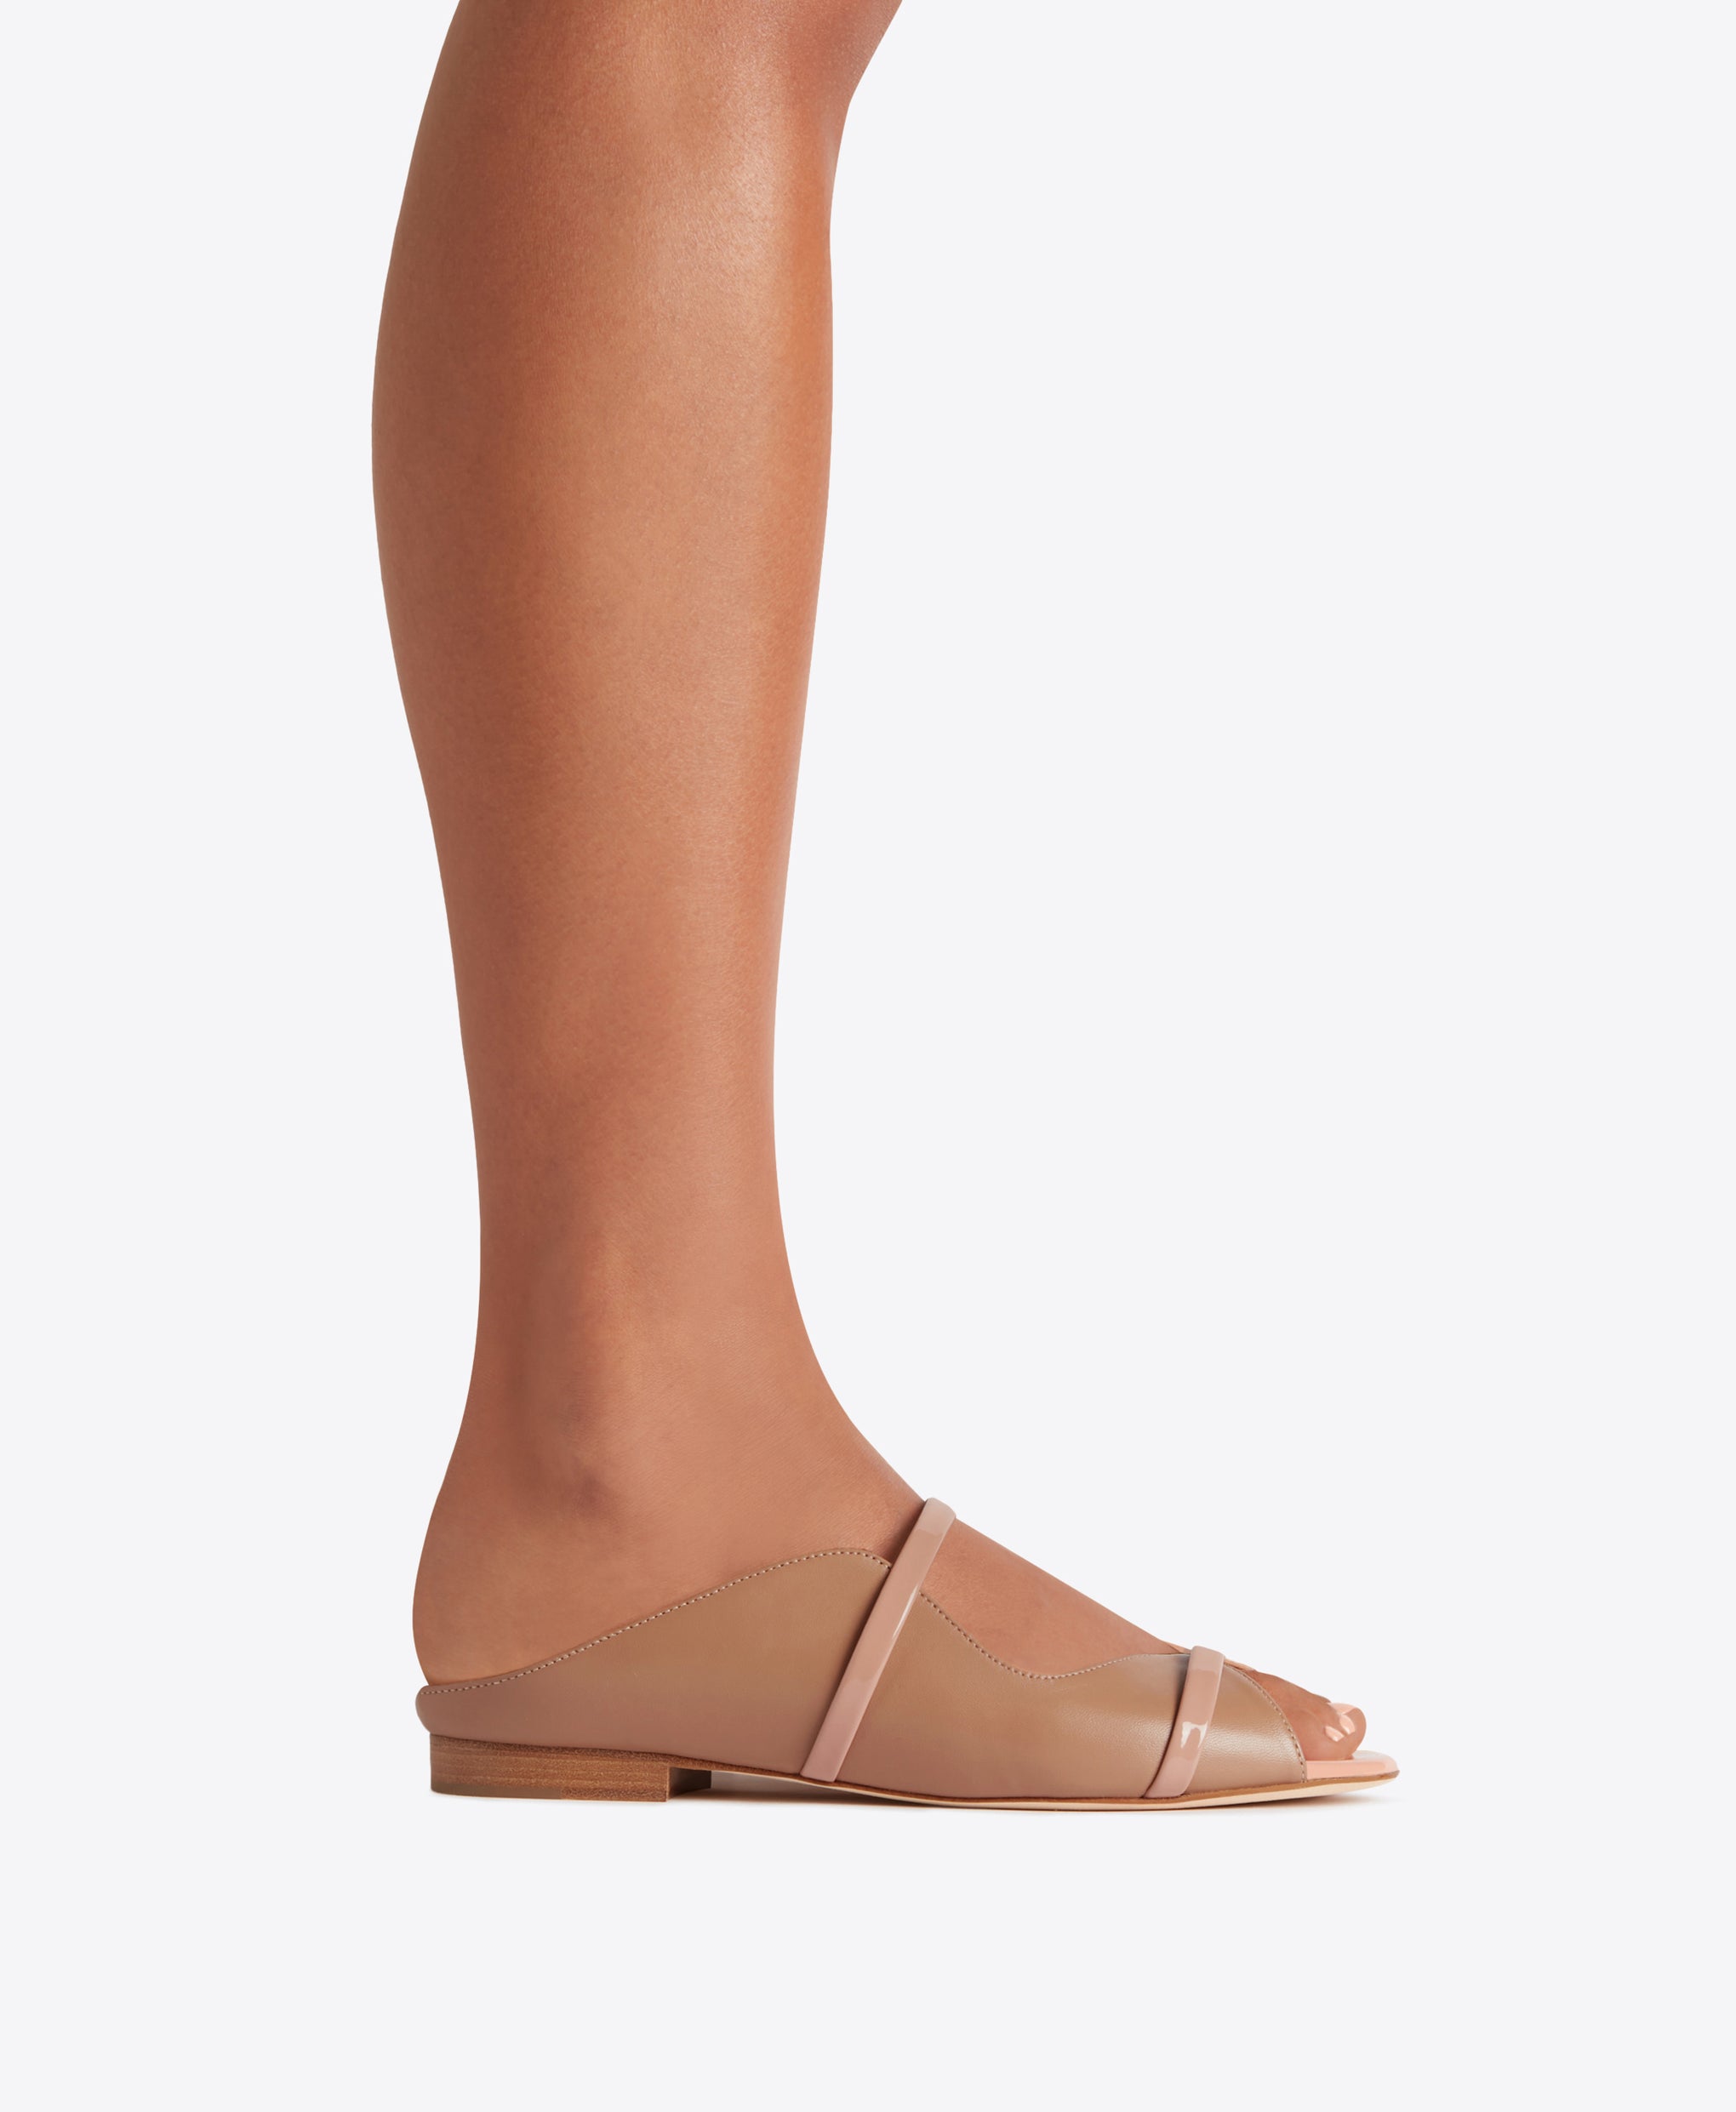 Women's Nude Leather Flat Sandal Malone Souliers